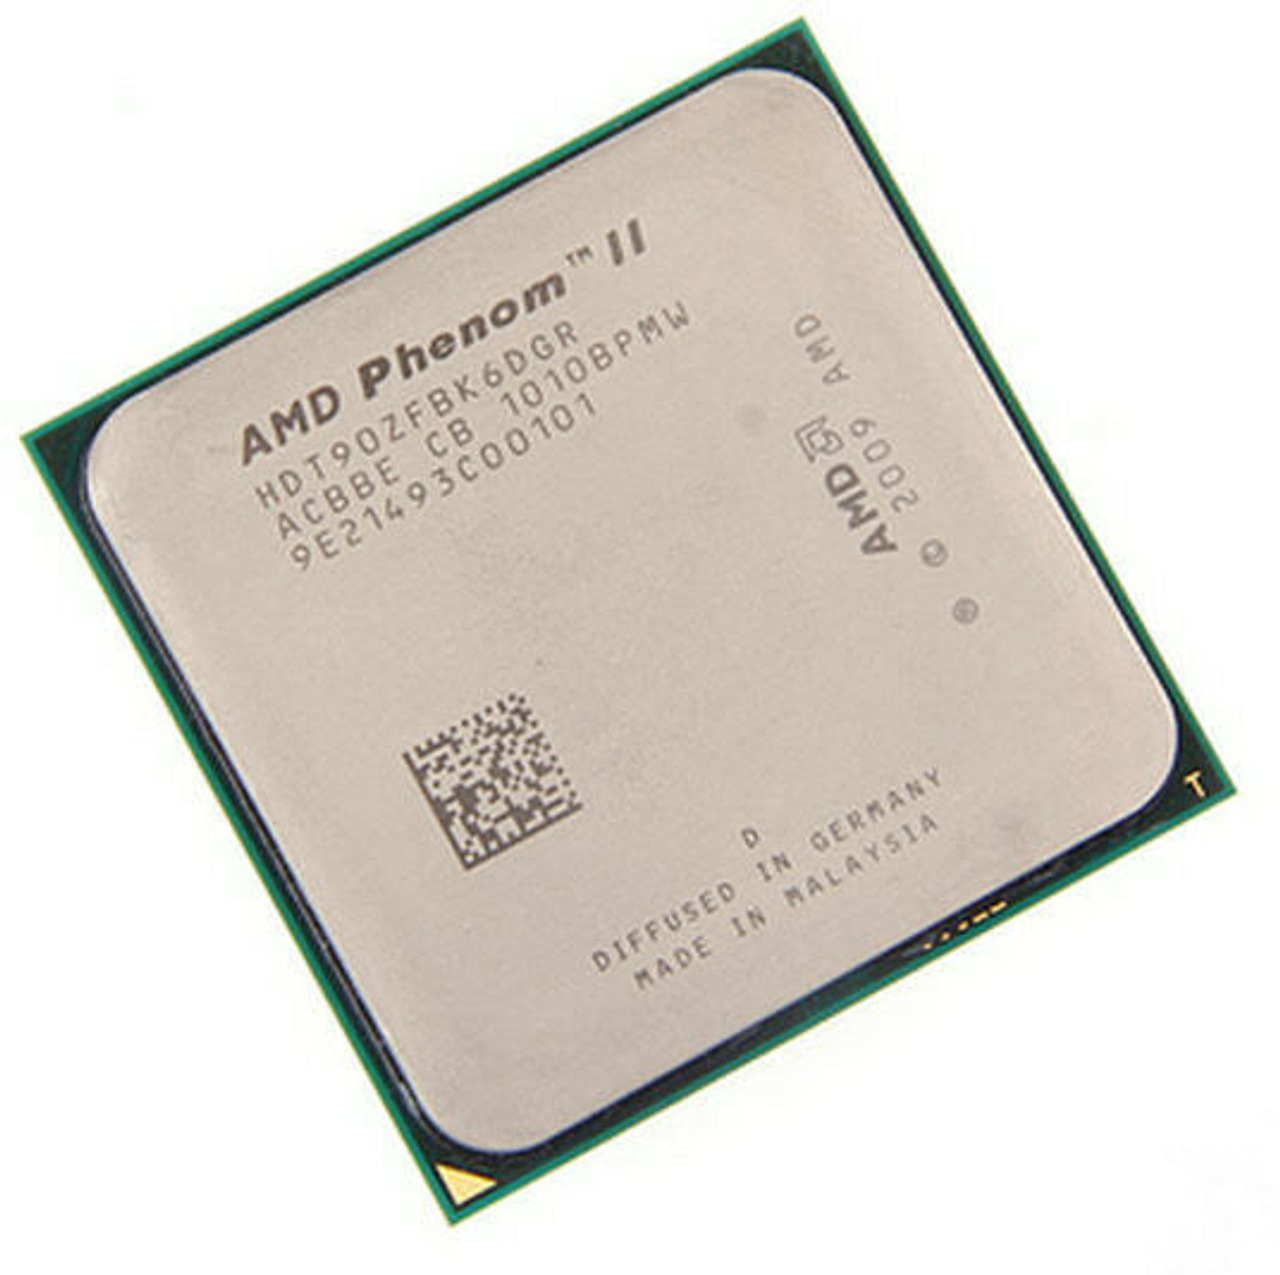 AMD Phenom II x6 1075t BeデスクトップCPU am3 938 hdt75zfbk6dgr hdt75zfbgrbox G  MB